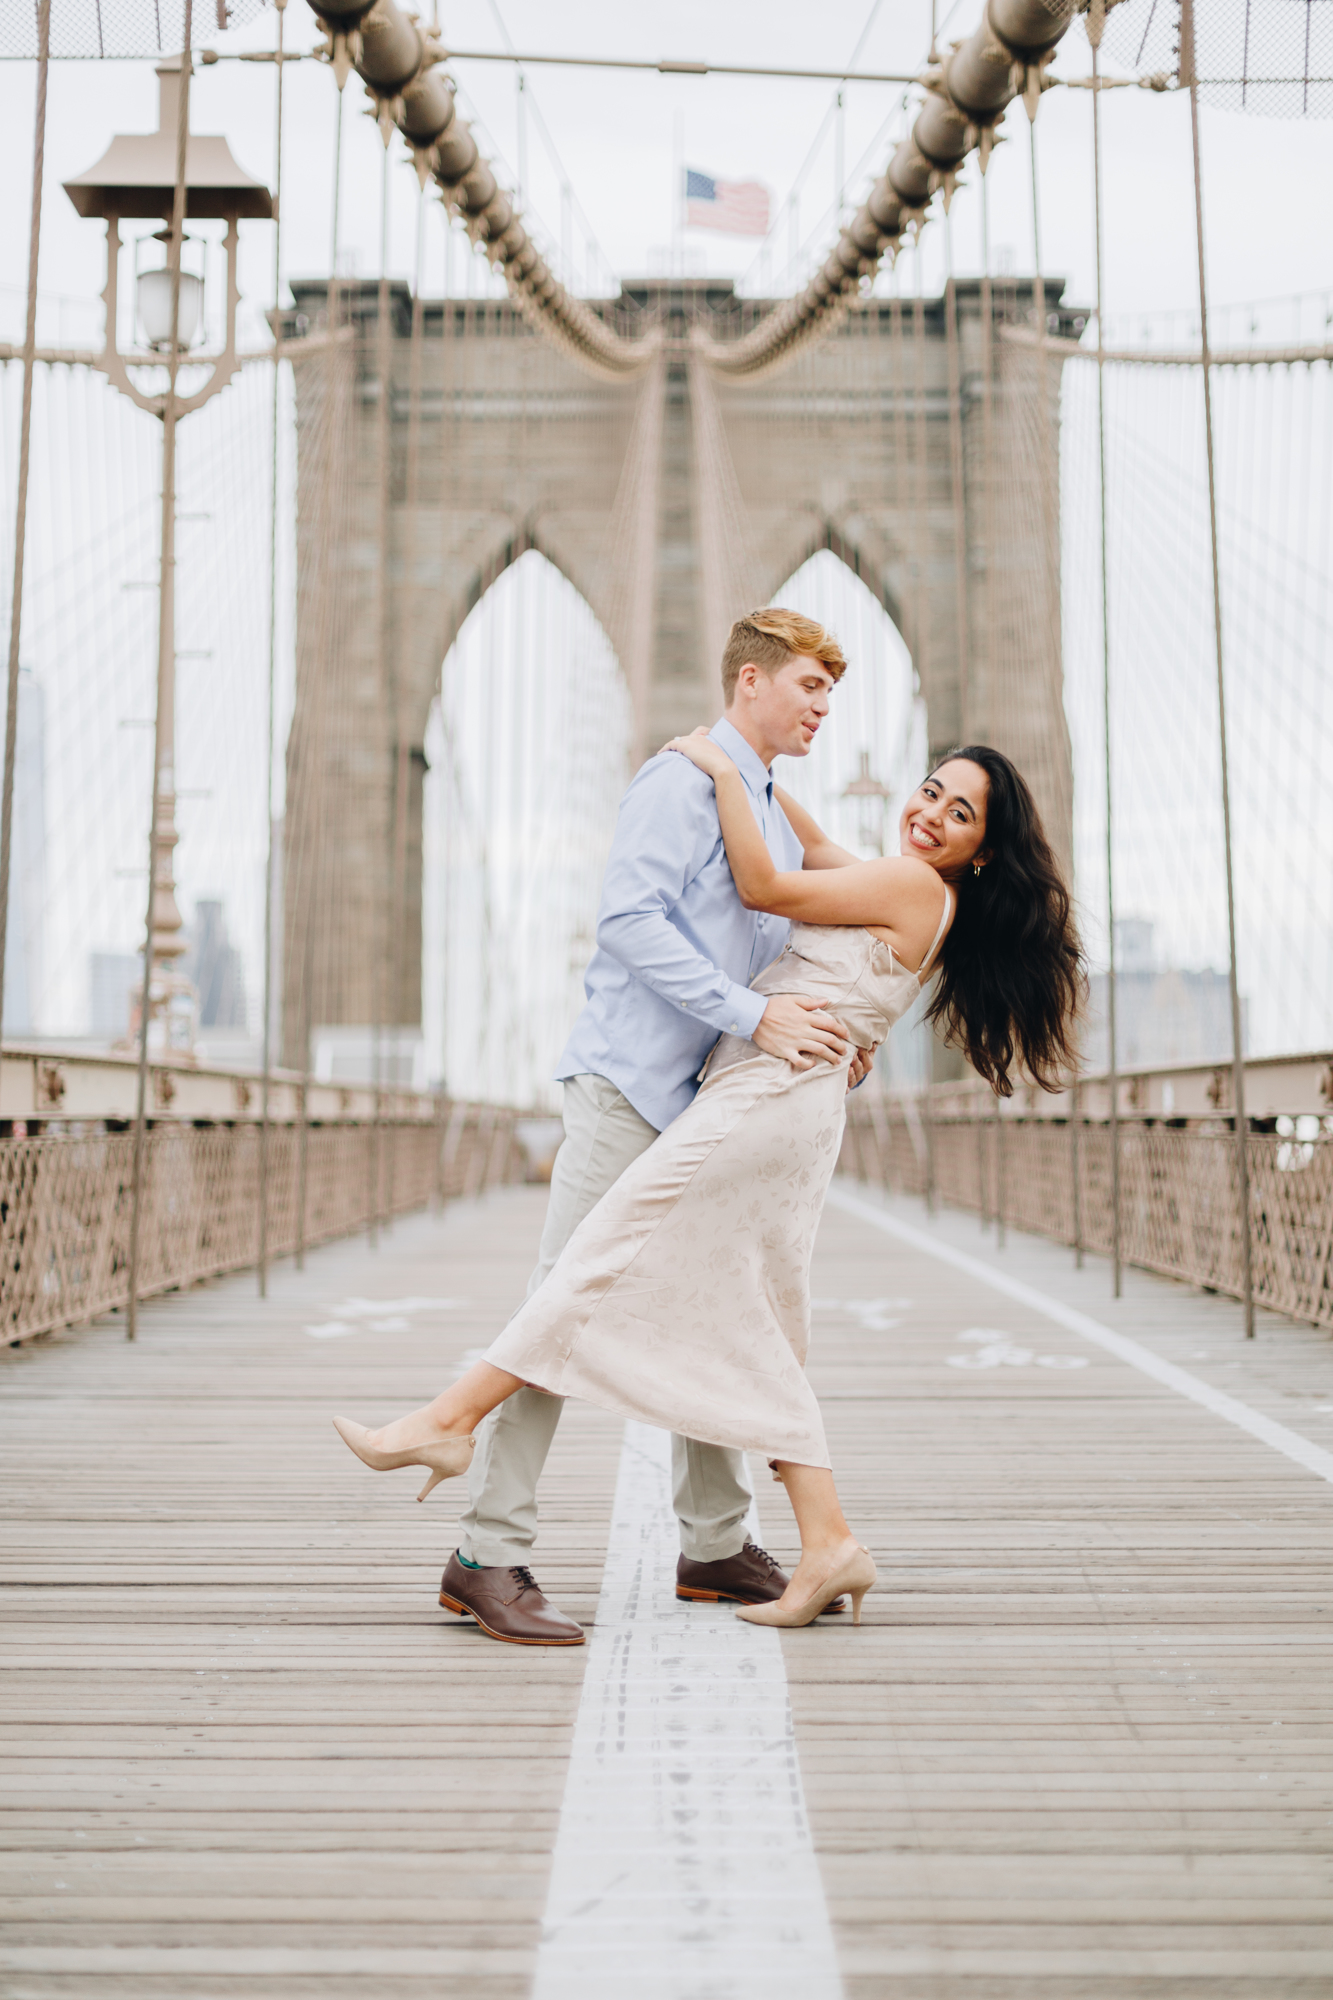 Fabulous Summertime Brooklyn Bridge Engagement Photos